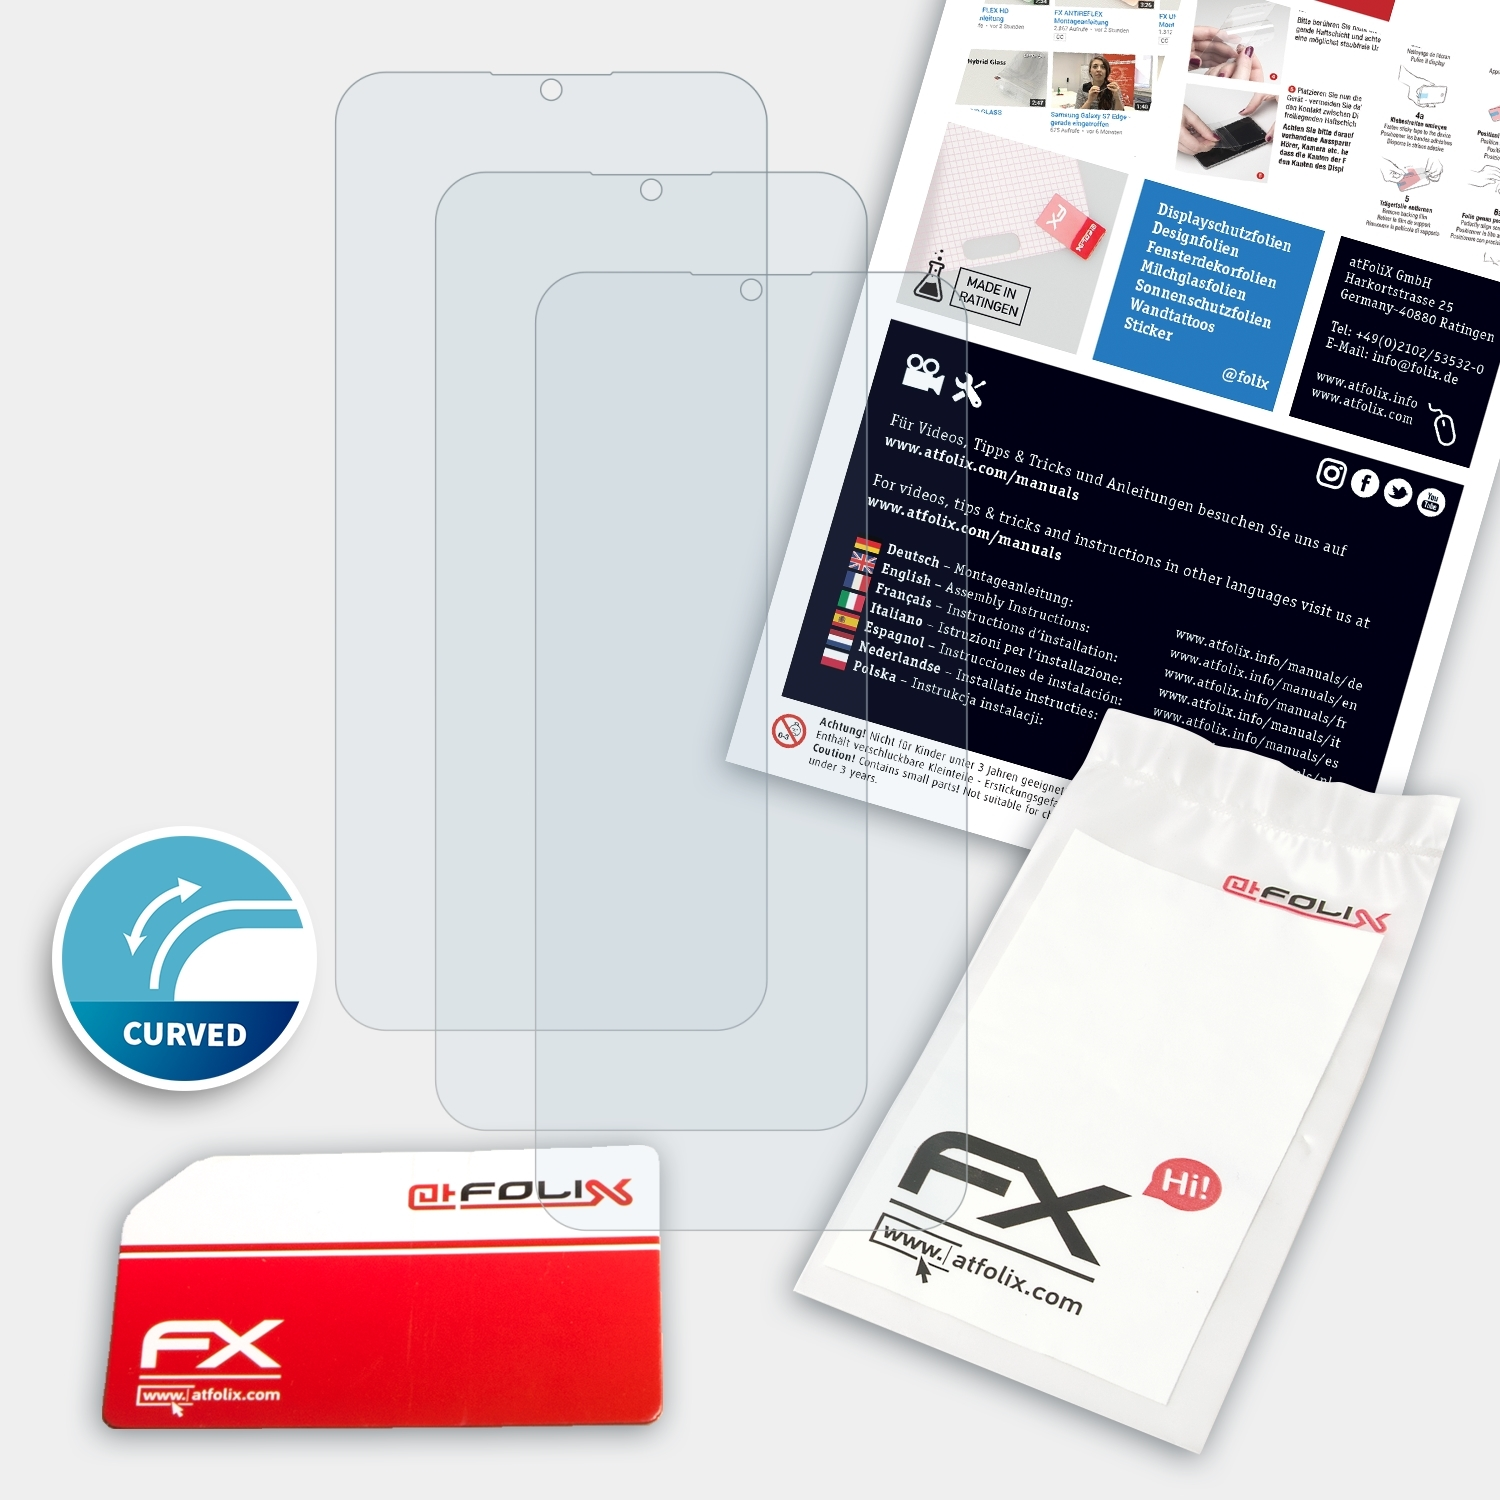 ATFOLIX 3x FX-ActiFleX Realme C21) Displayschutz(für